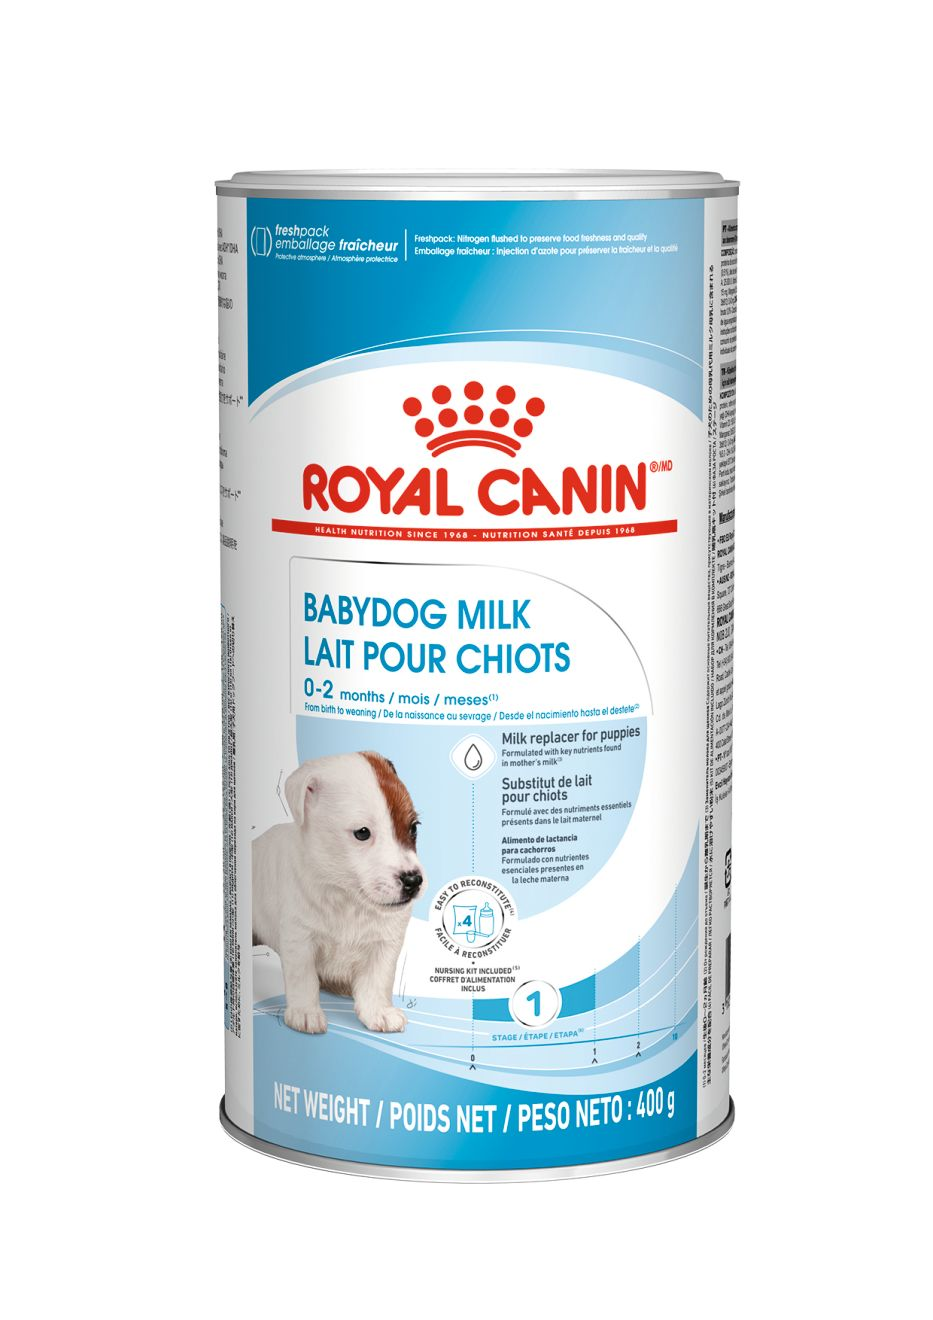 ROYAL CANIN นมผงทดแทนนมแม่ สำหรับลูกสุนัข (Babydog Milk)